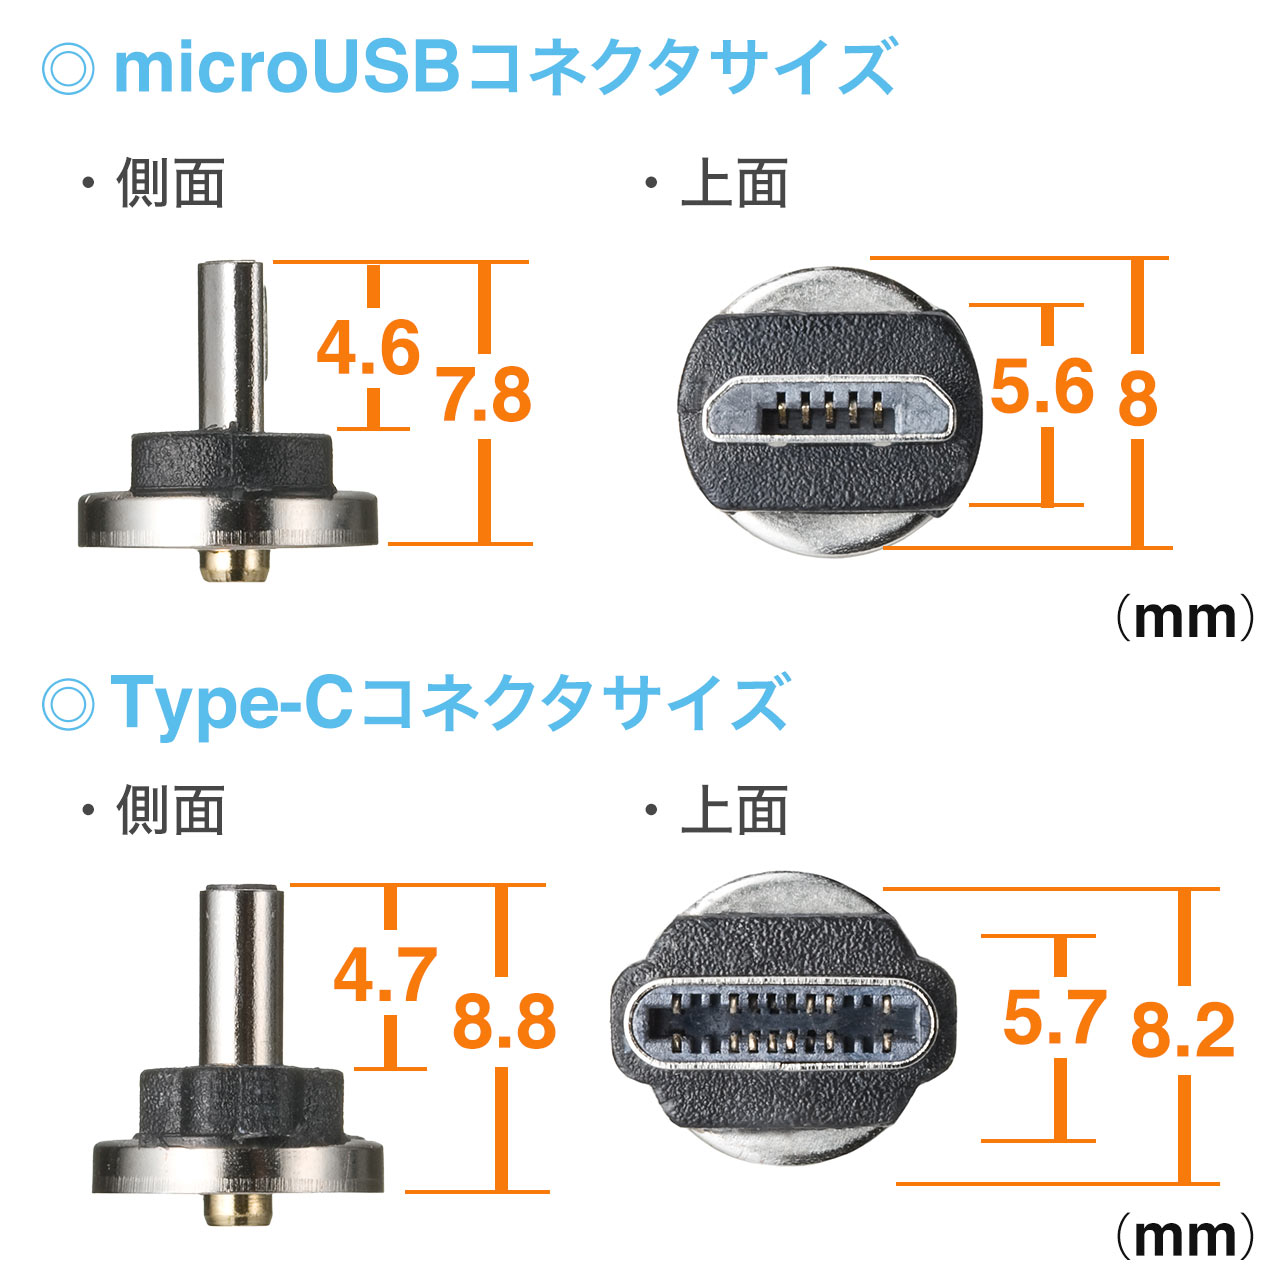 X}[gtH }Olbg[dX^h USB Type-C microUSBڑ 200-STN031